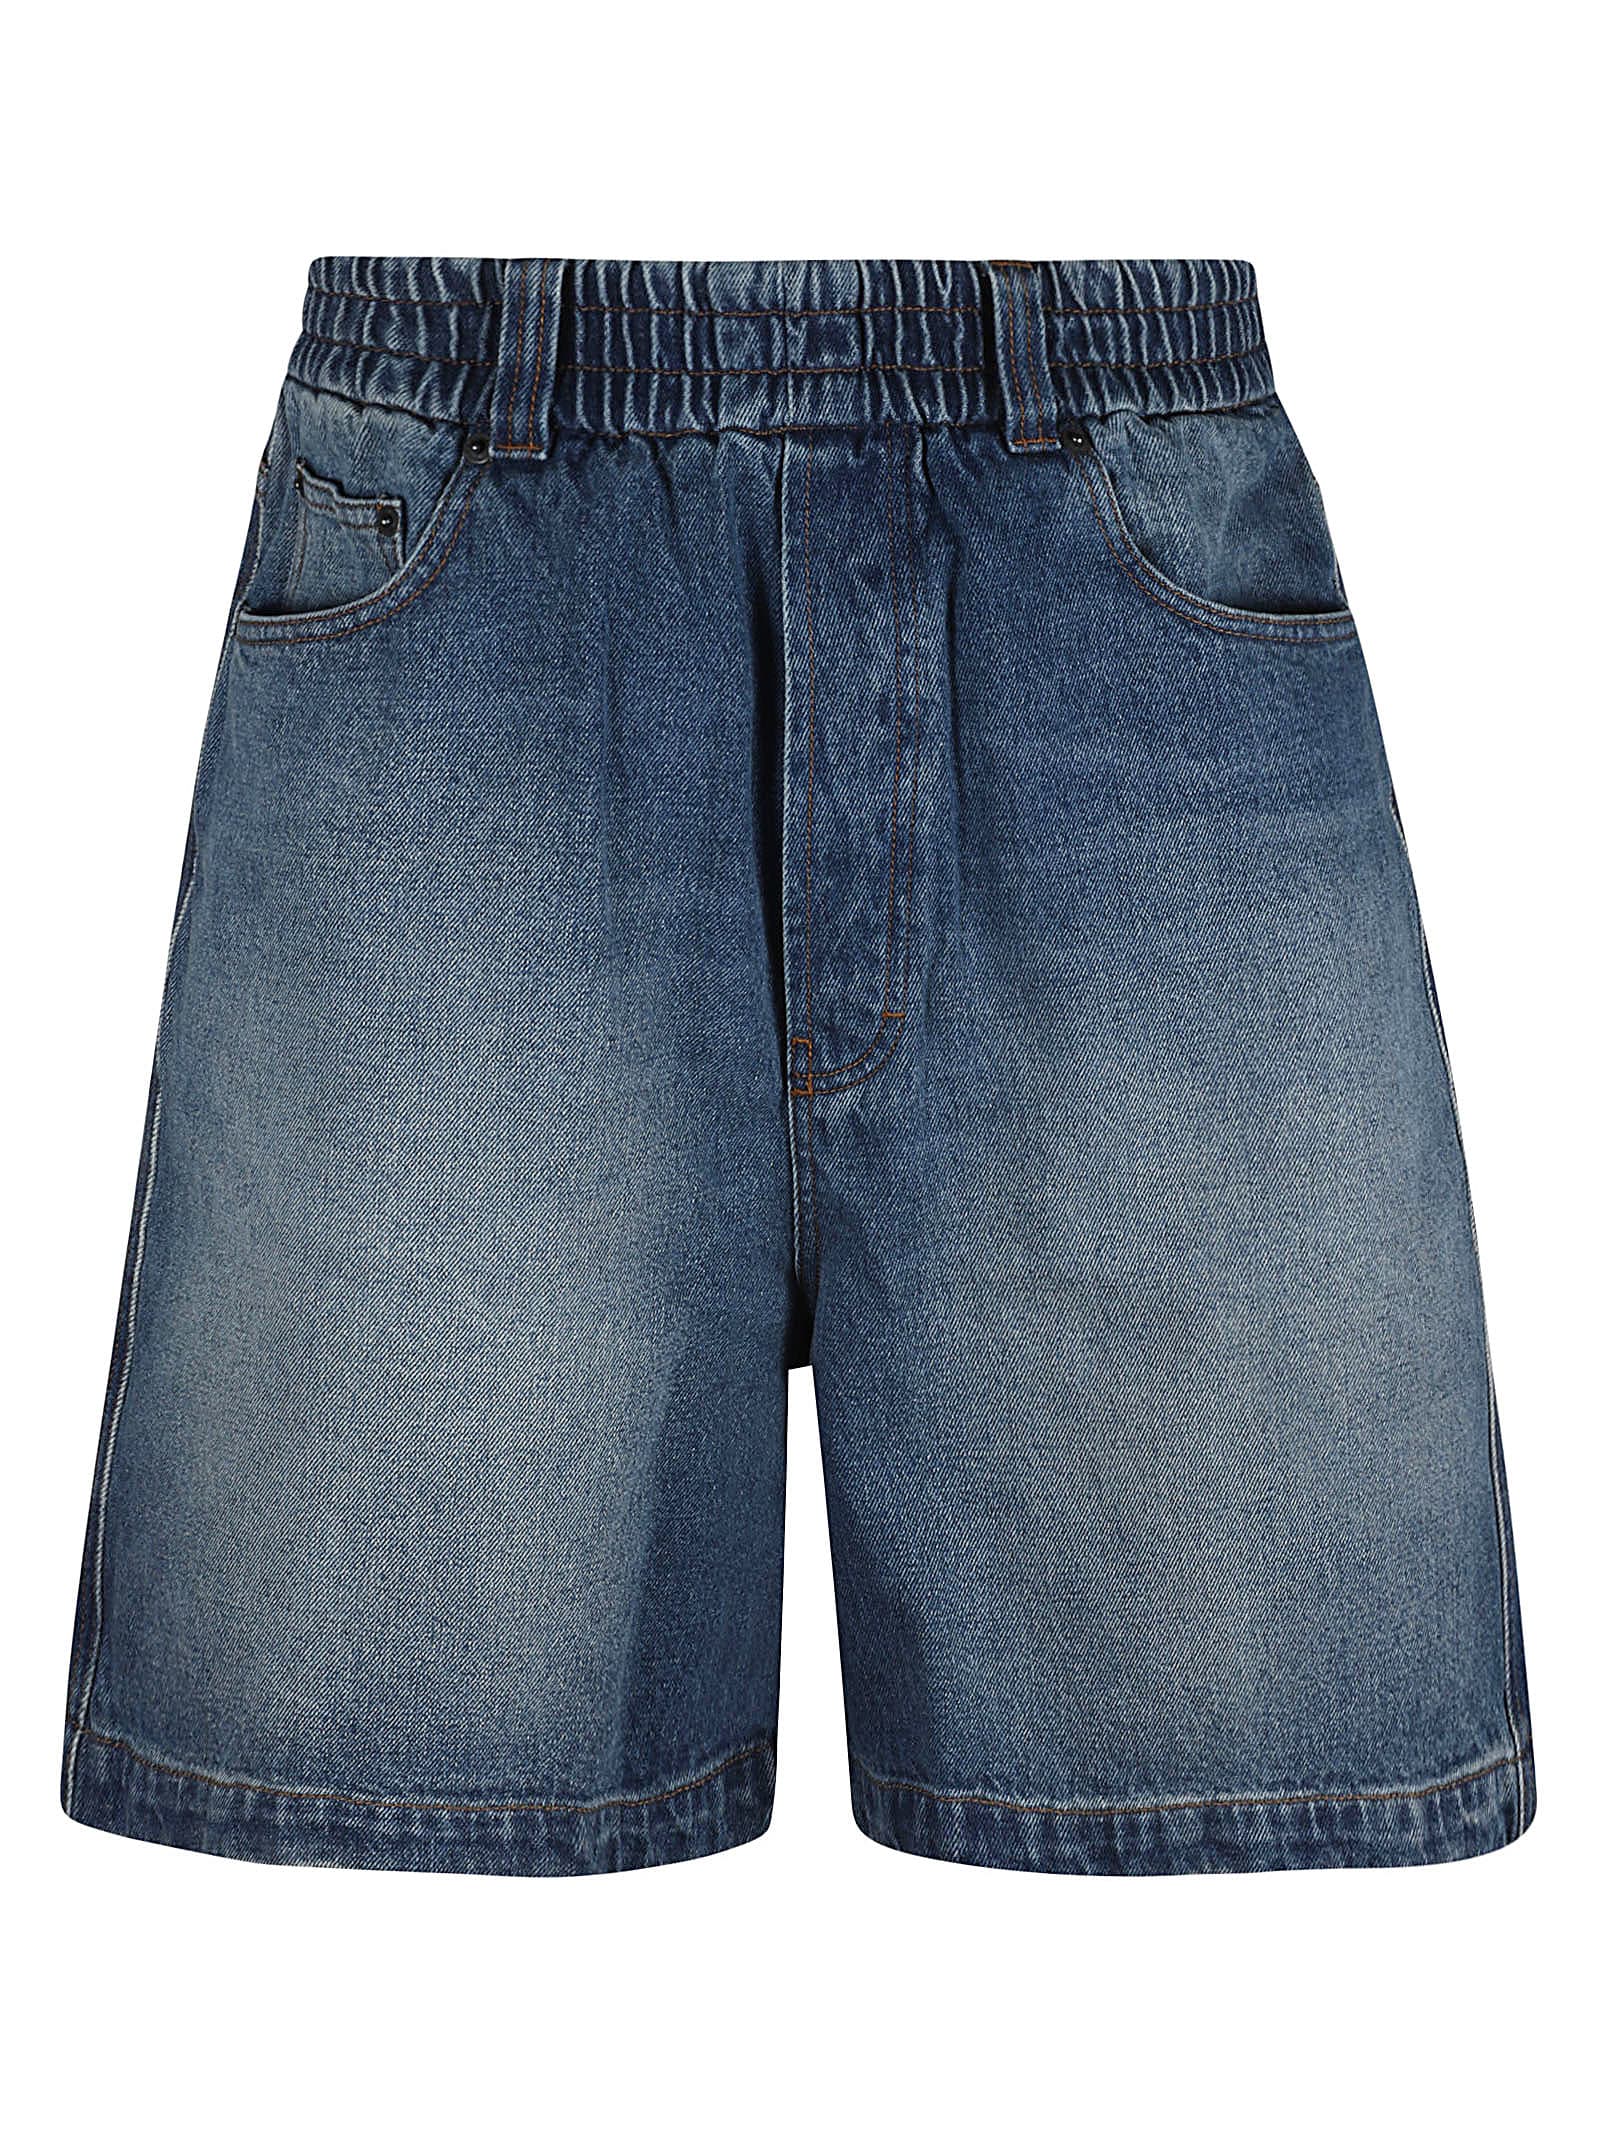 Ami Alexandre Mattiussi Cotton Denim Shorts In Denim Blue